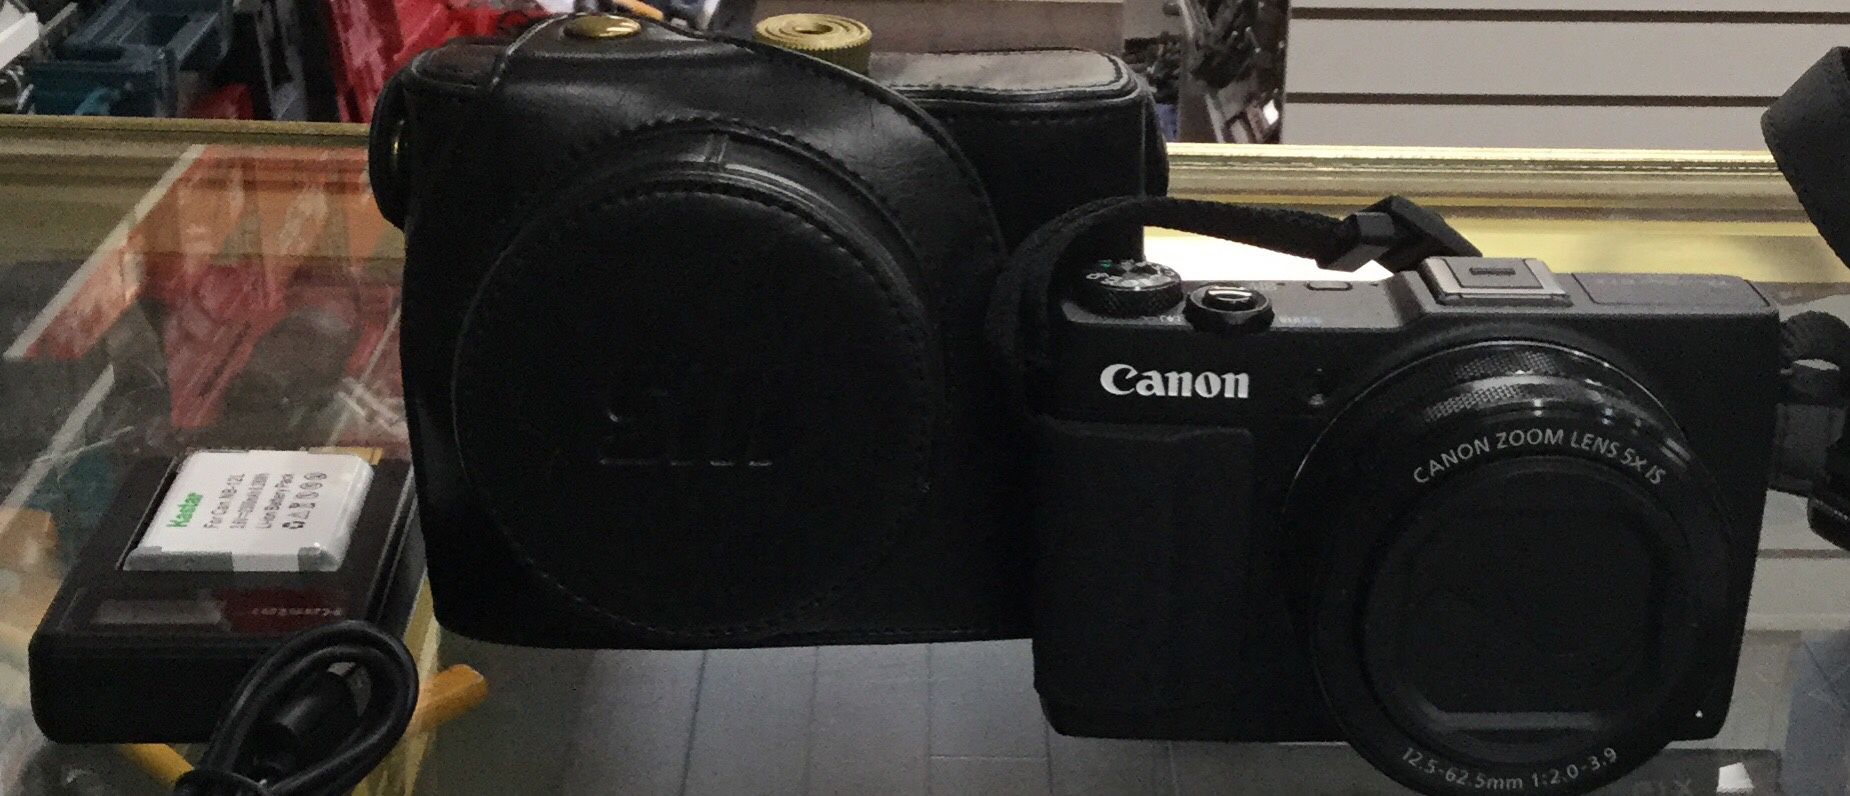 Canon powershot G1 X Mark 2 digital camera